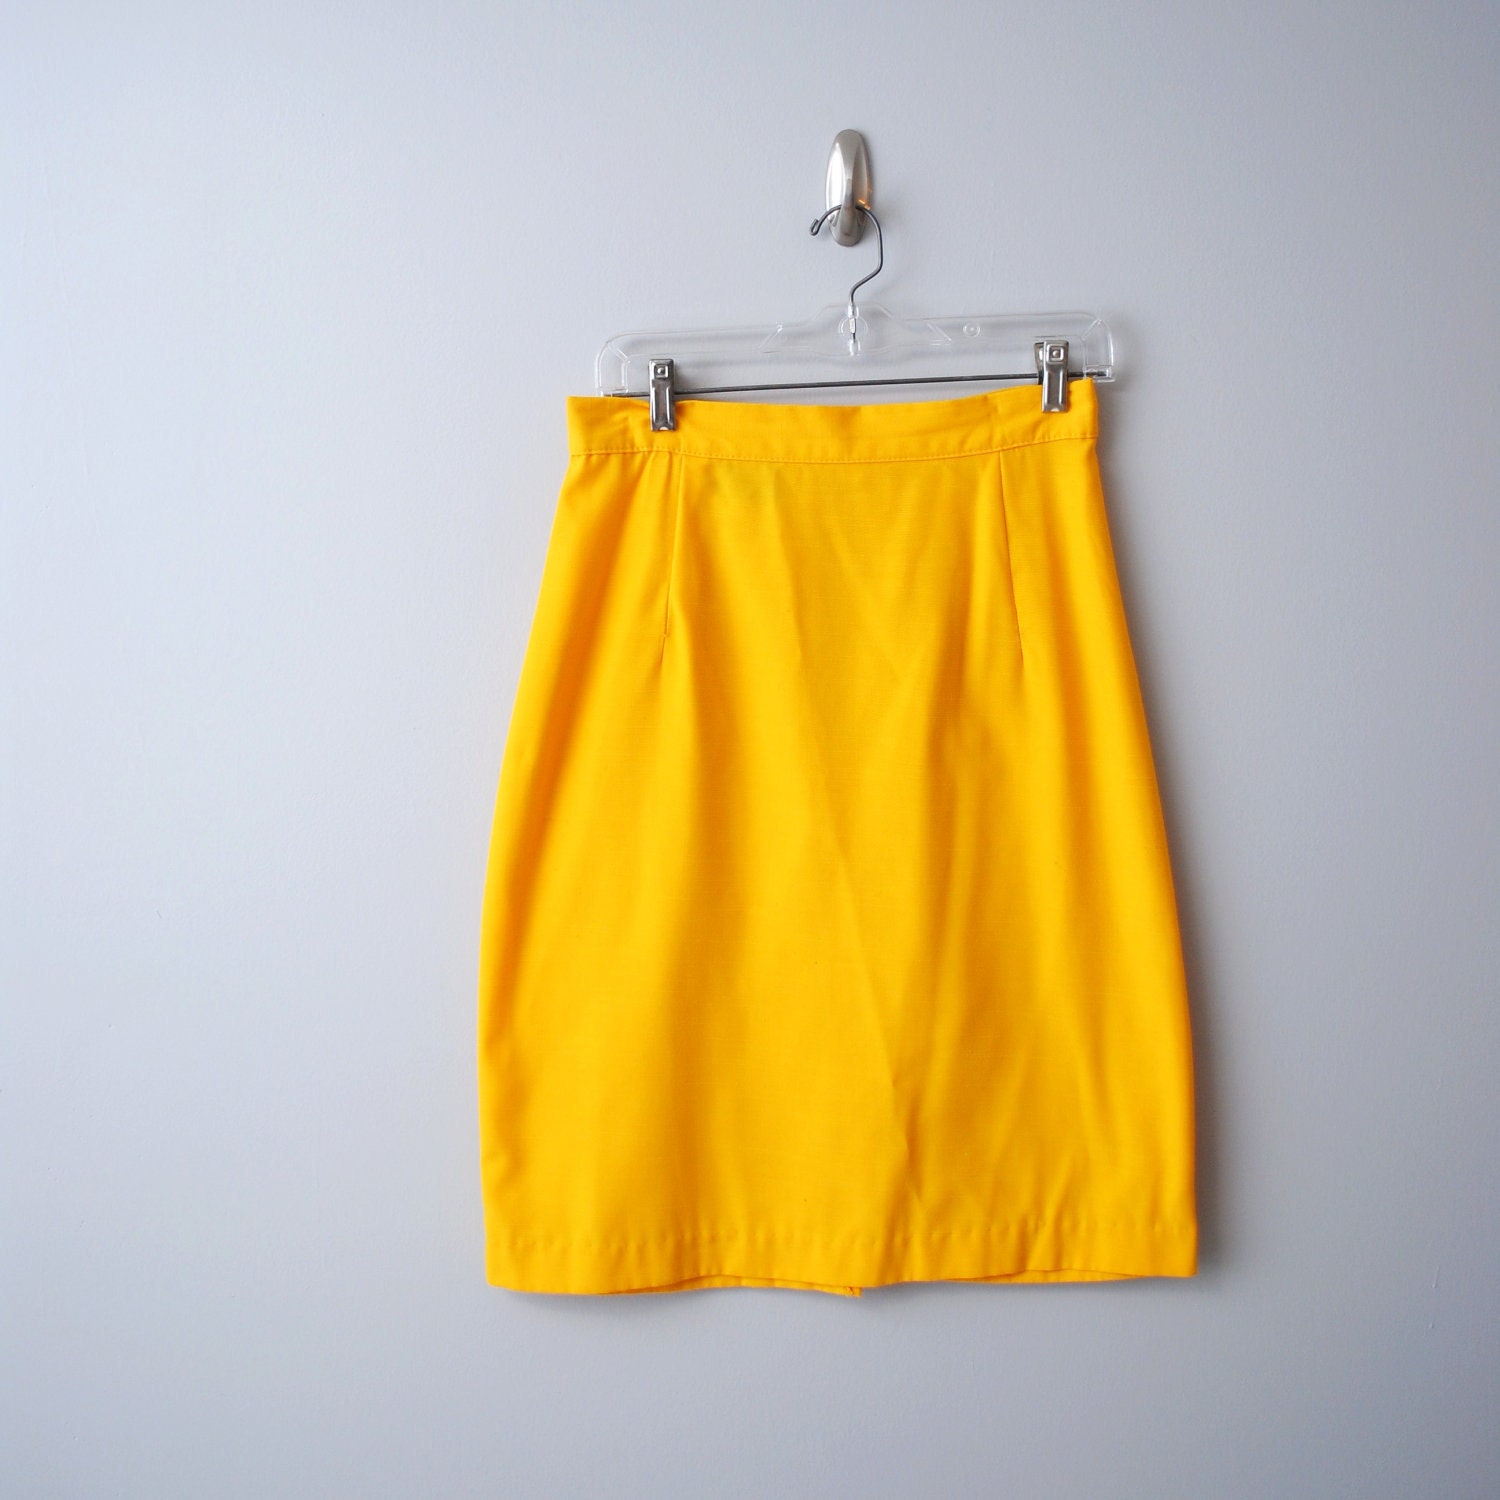 V i n t a g e Bright Yellow pencil Skirt, 28.5 WAIST